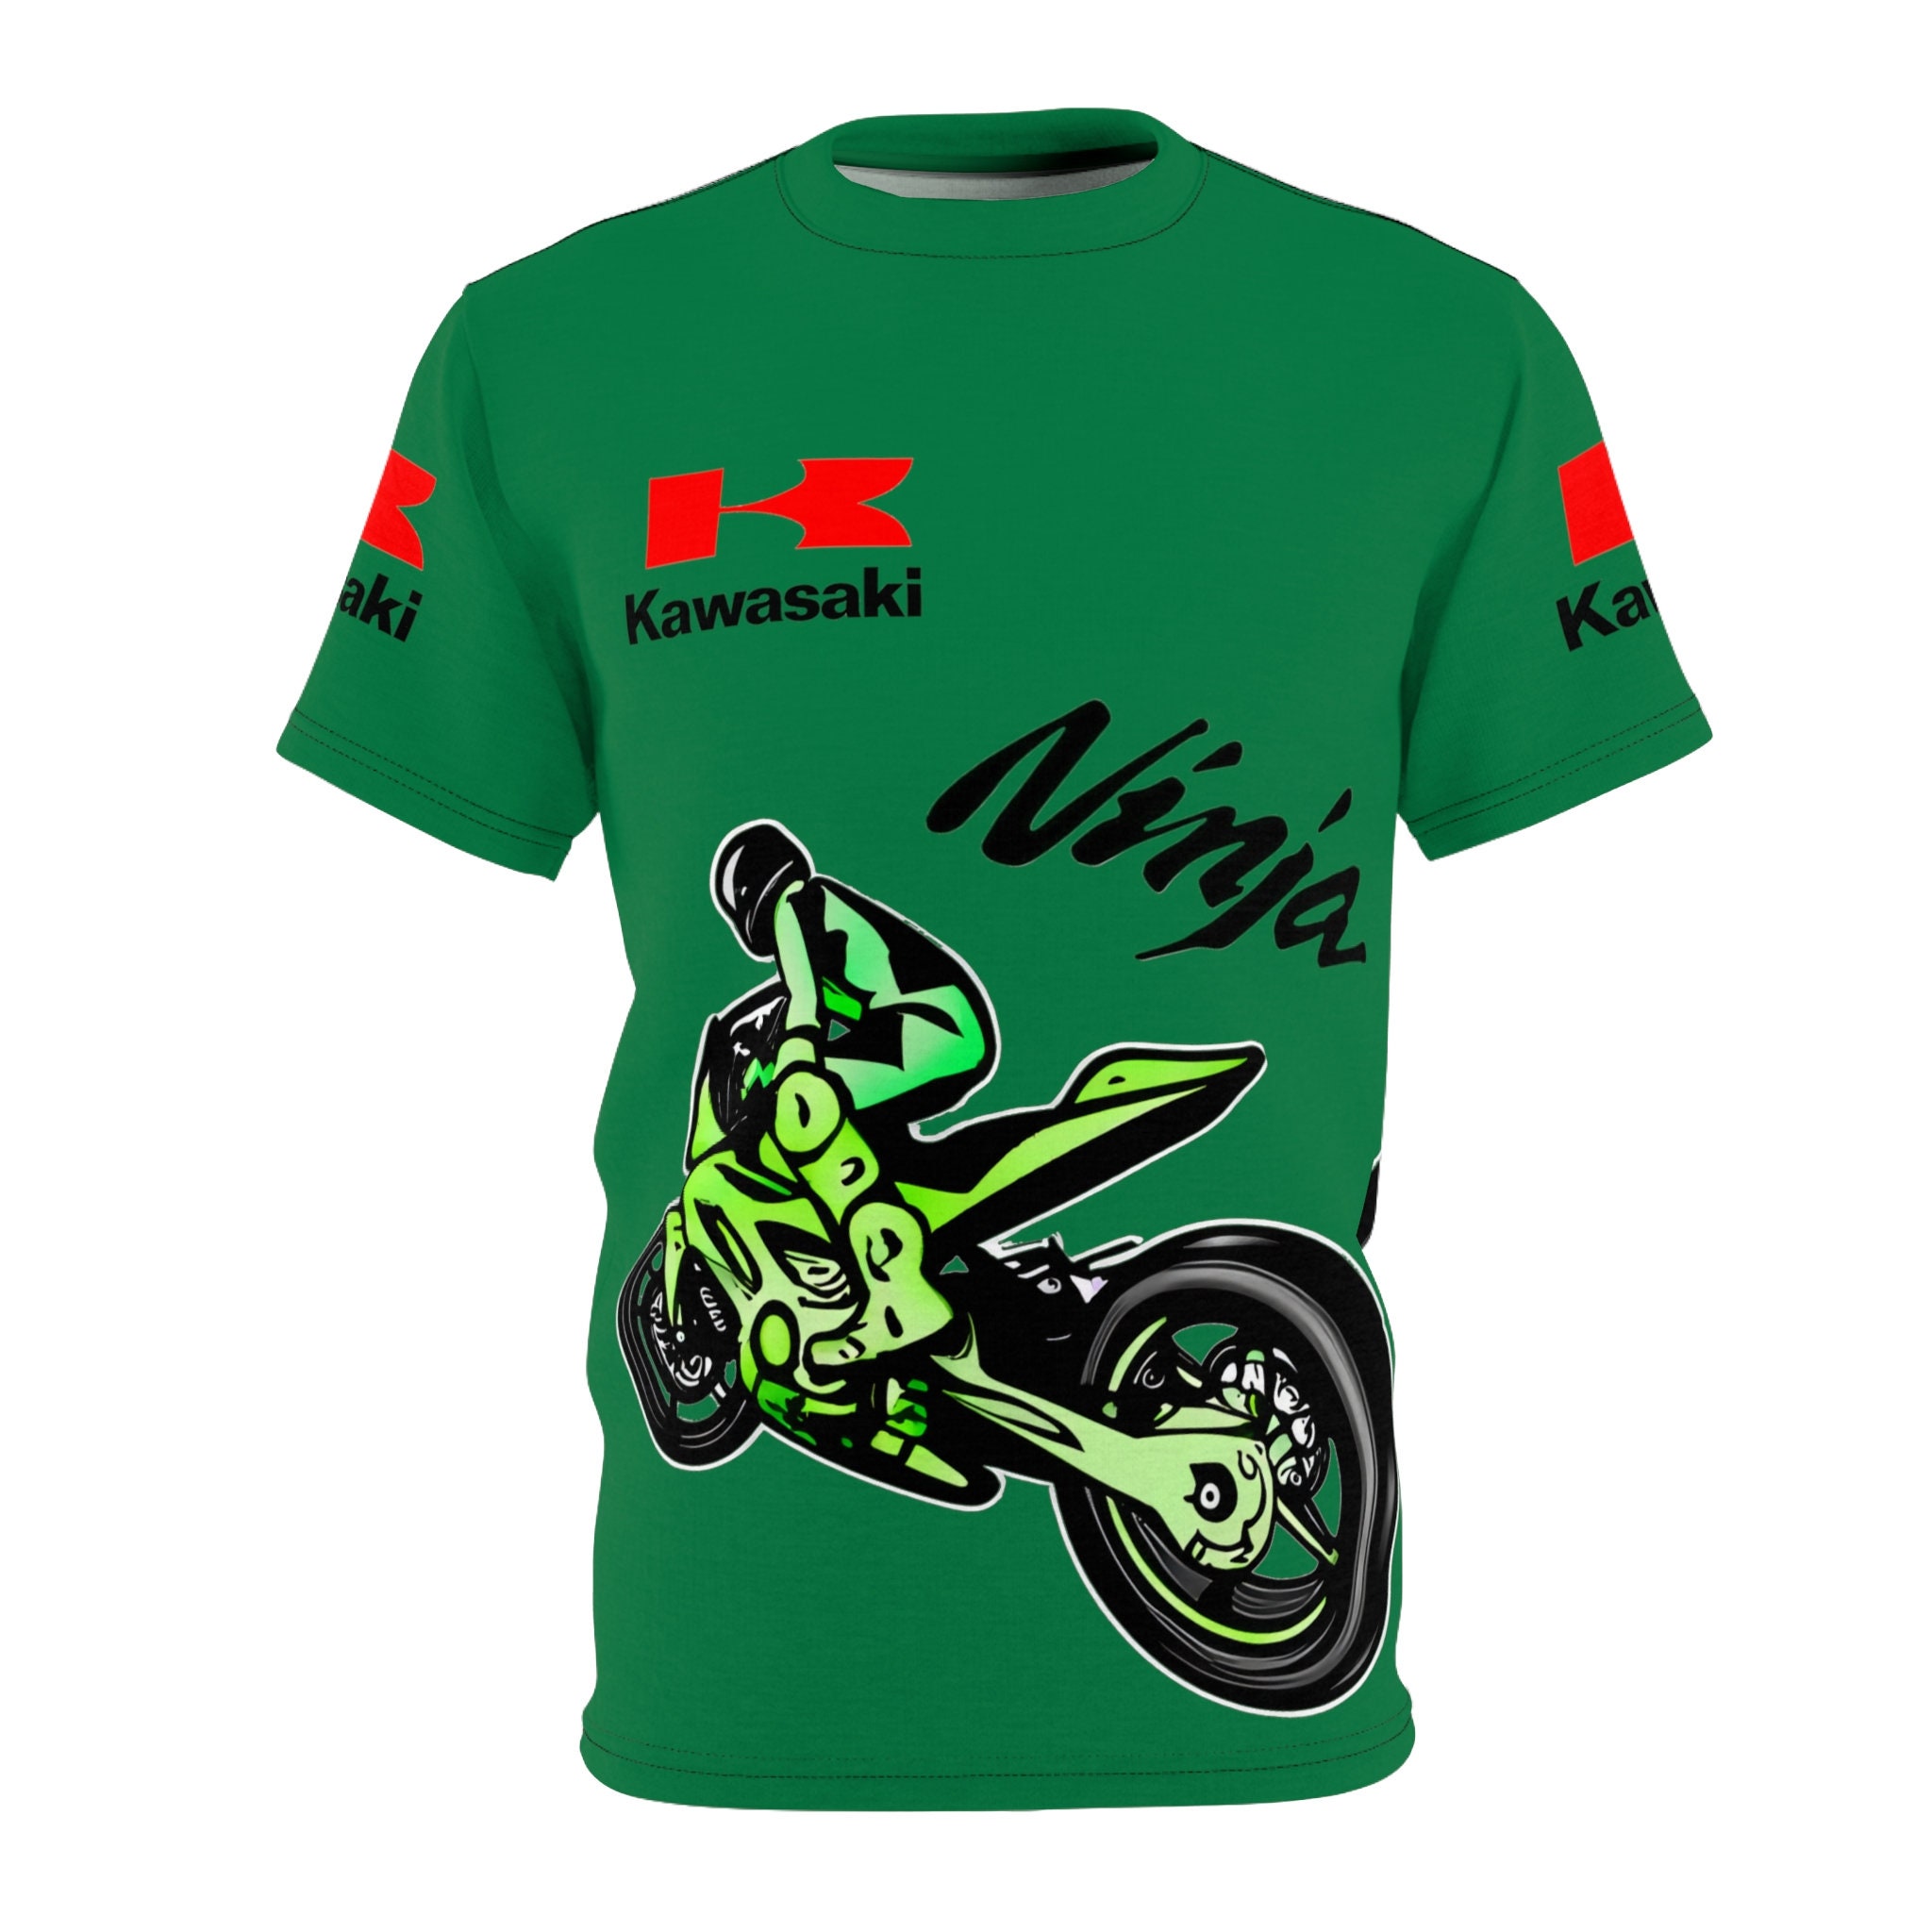 Cool Kawasaki Ninja ZX-4RR Motorcycle T-shirt. 